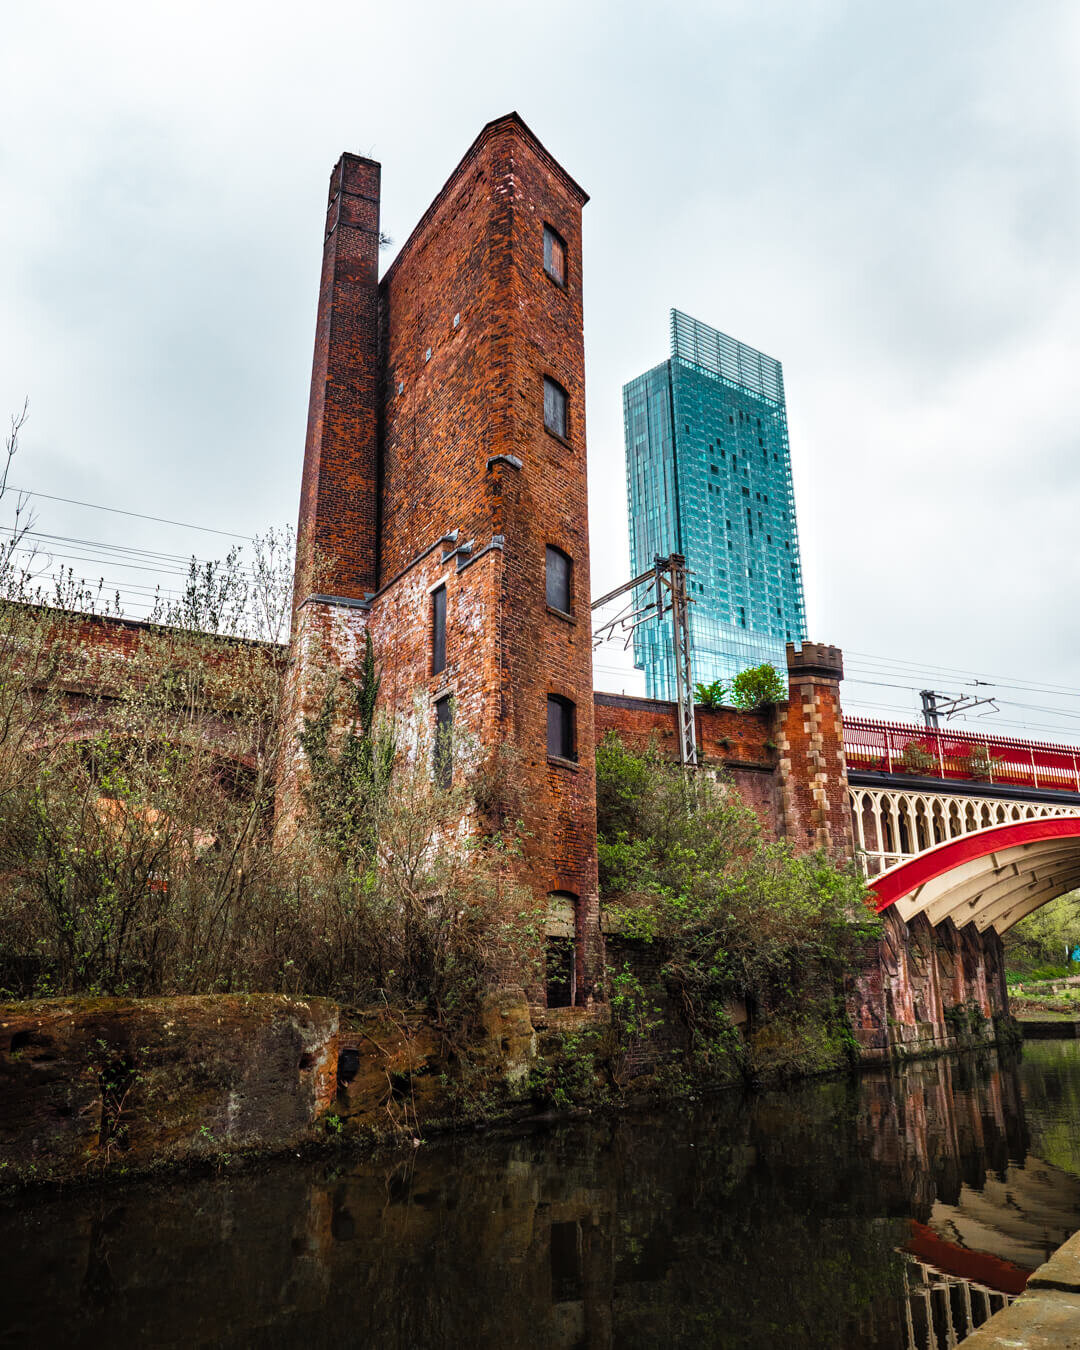 Classic red brick Castlefield architecture in Manchester